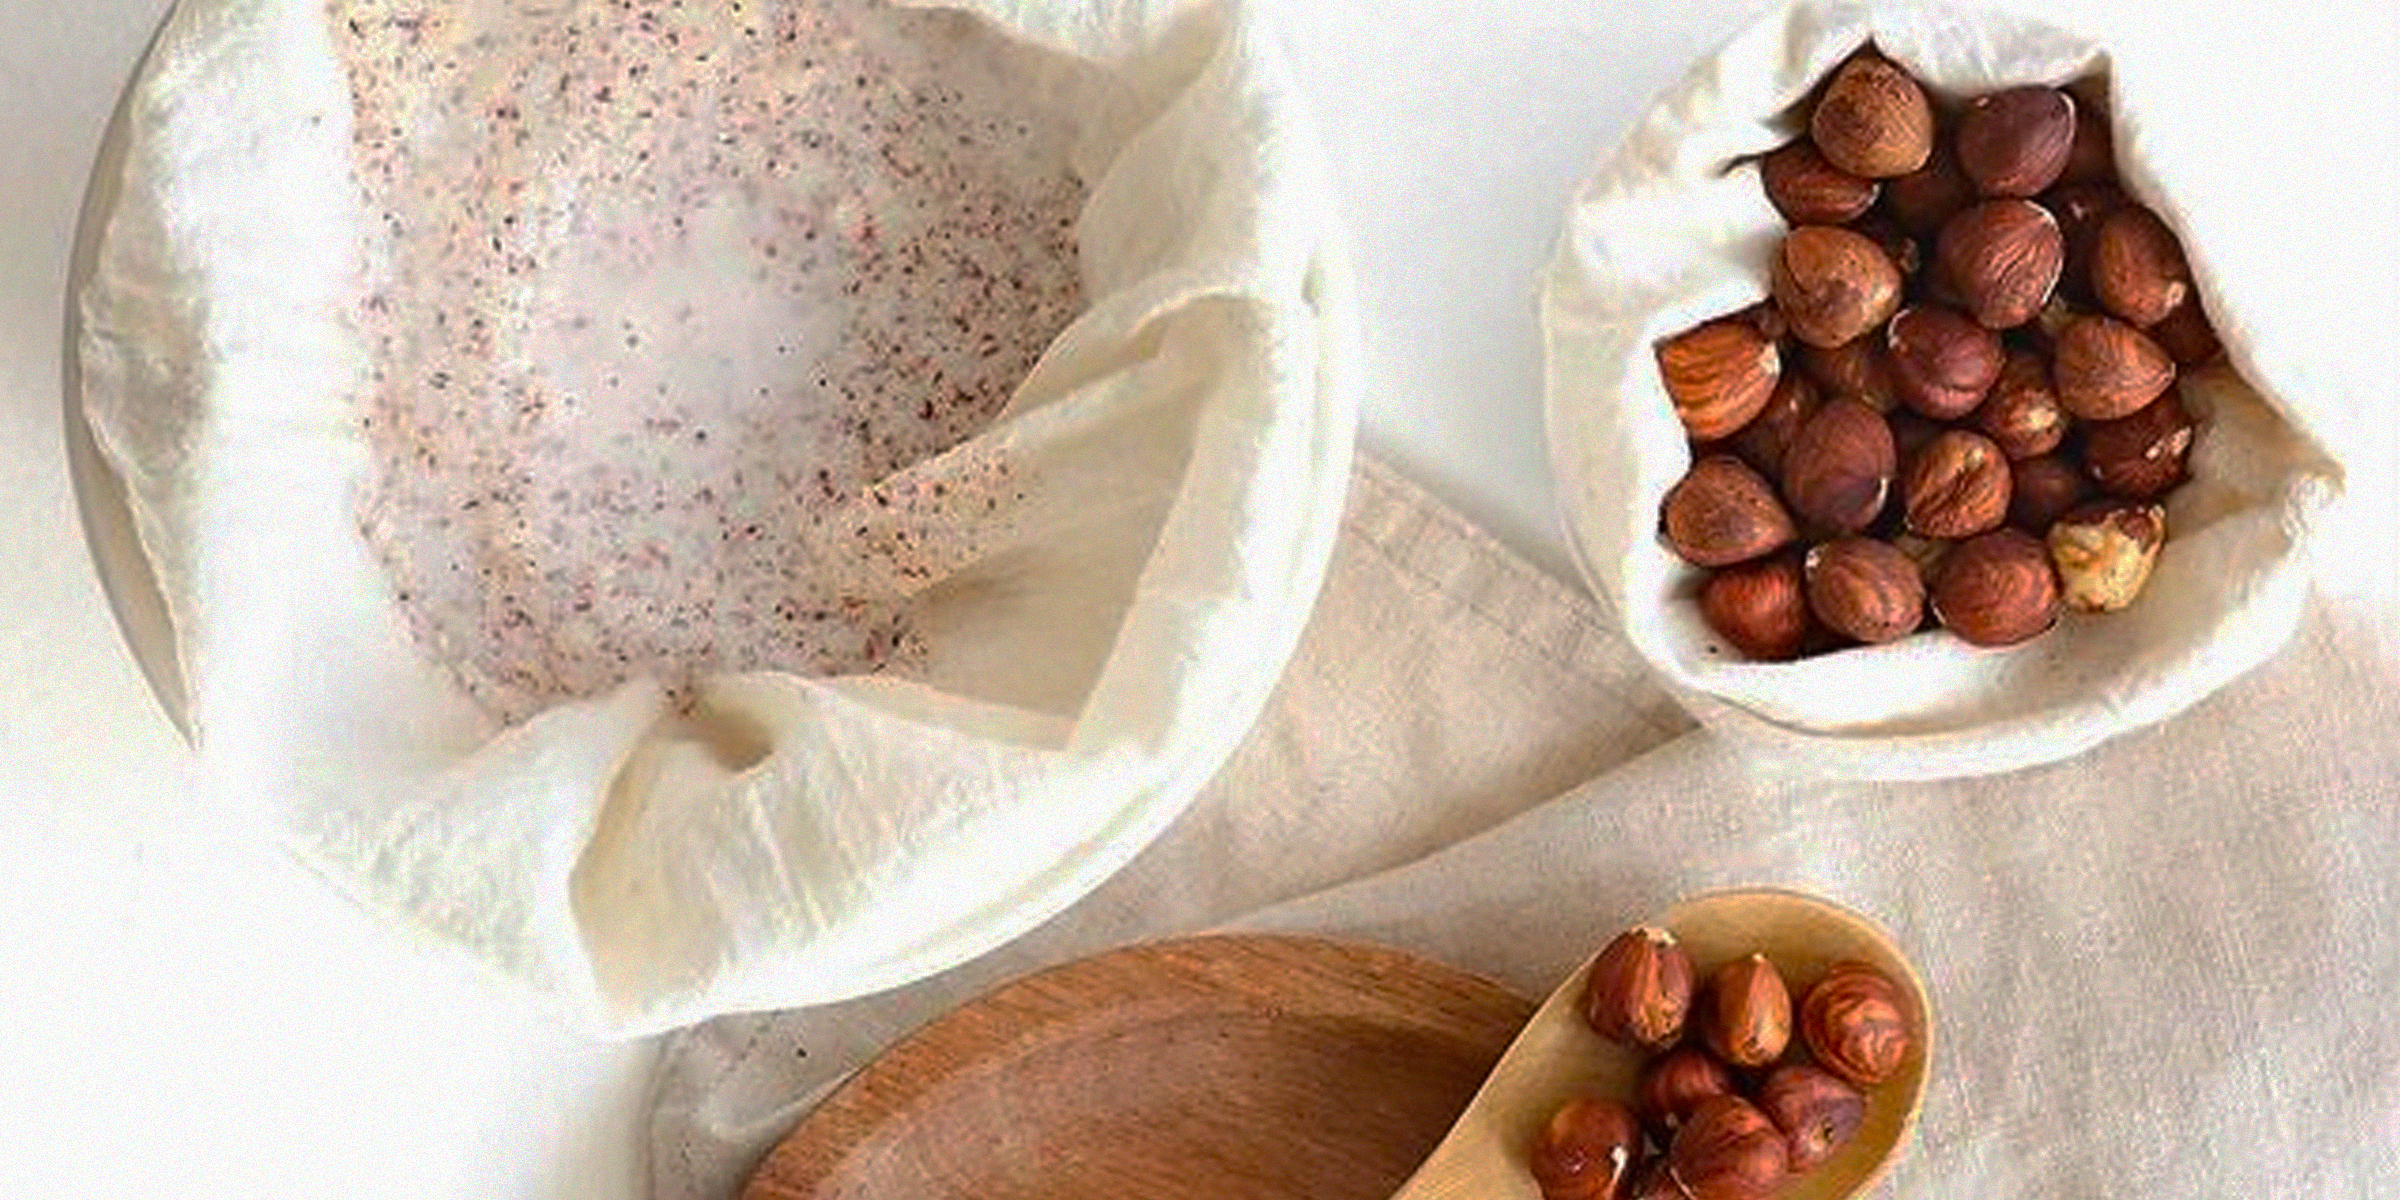 A nut milk bag | Source: Instagram/pureosophy